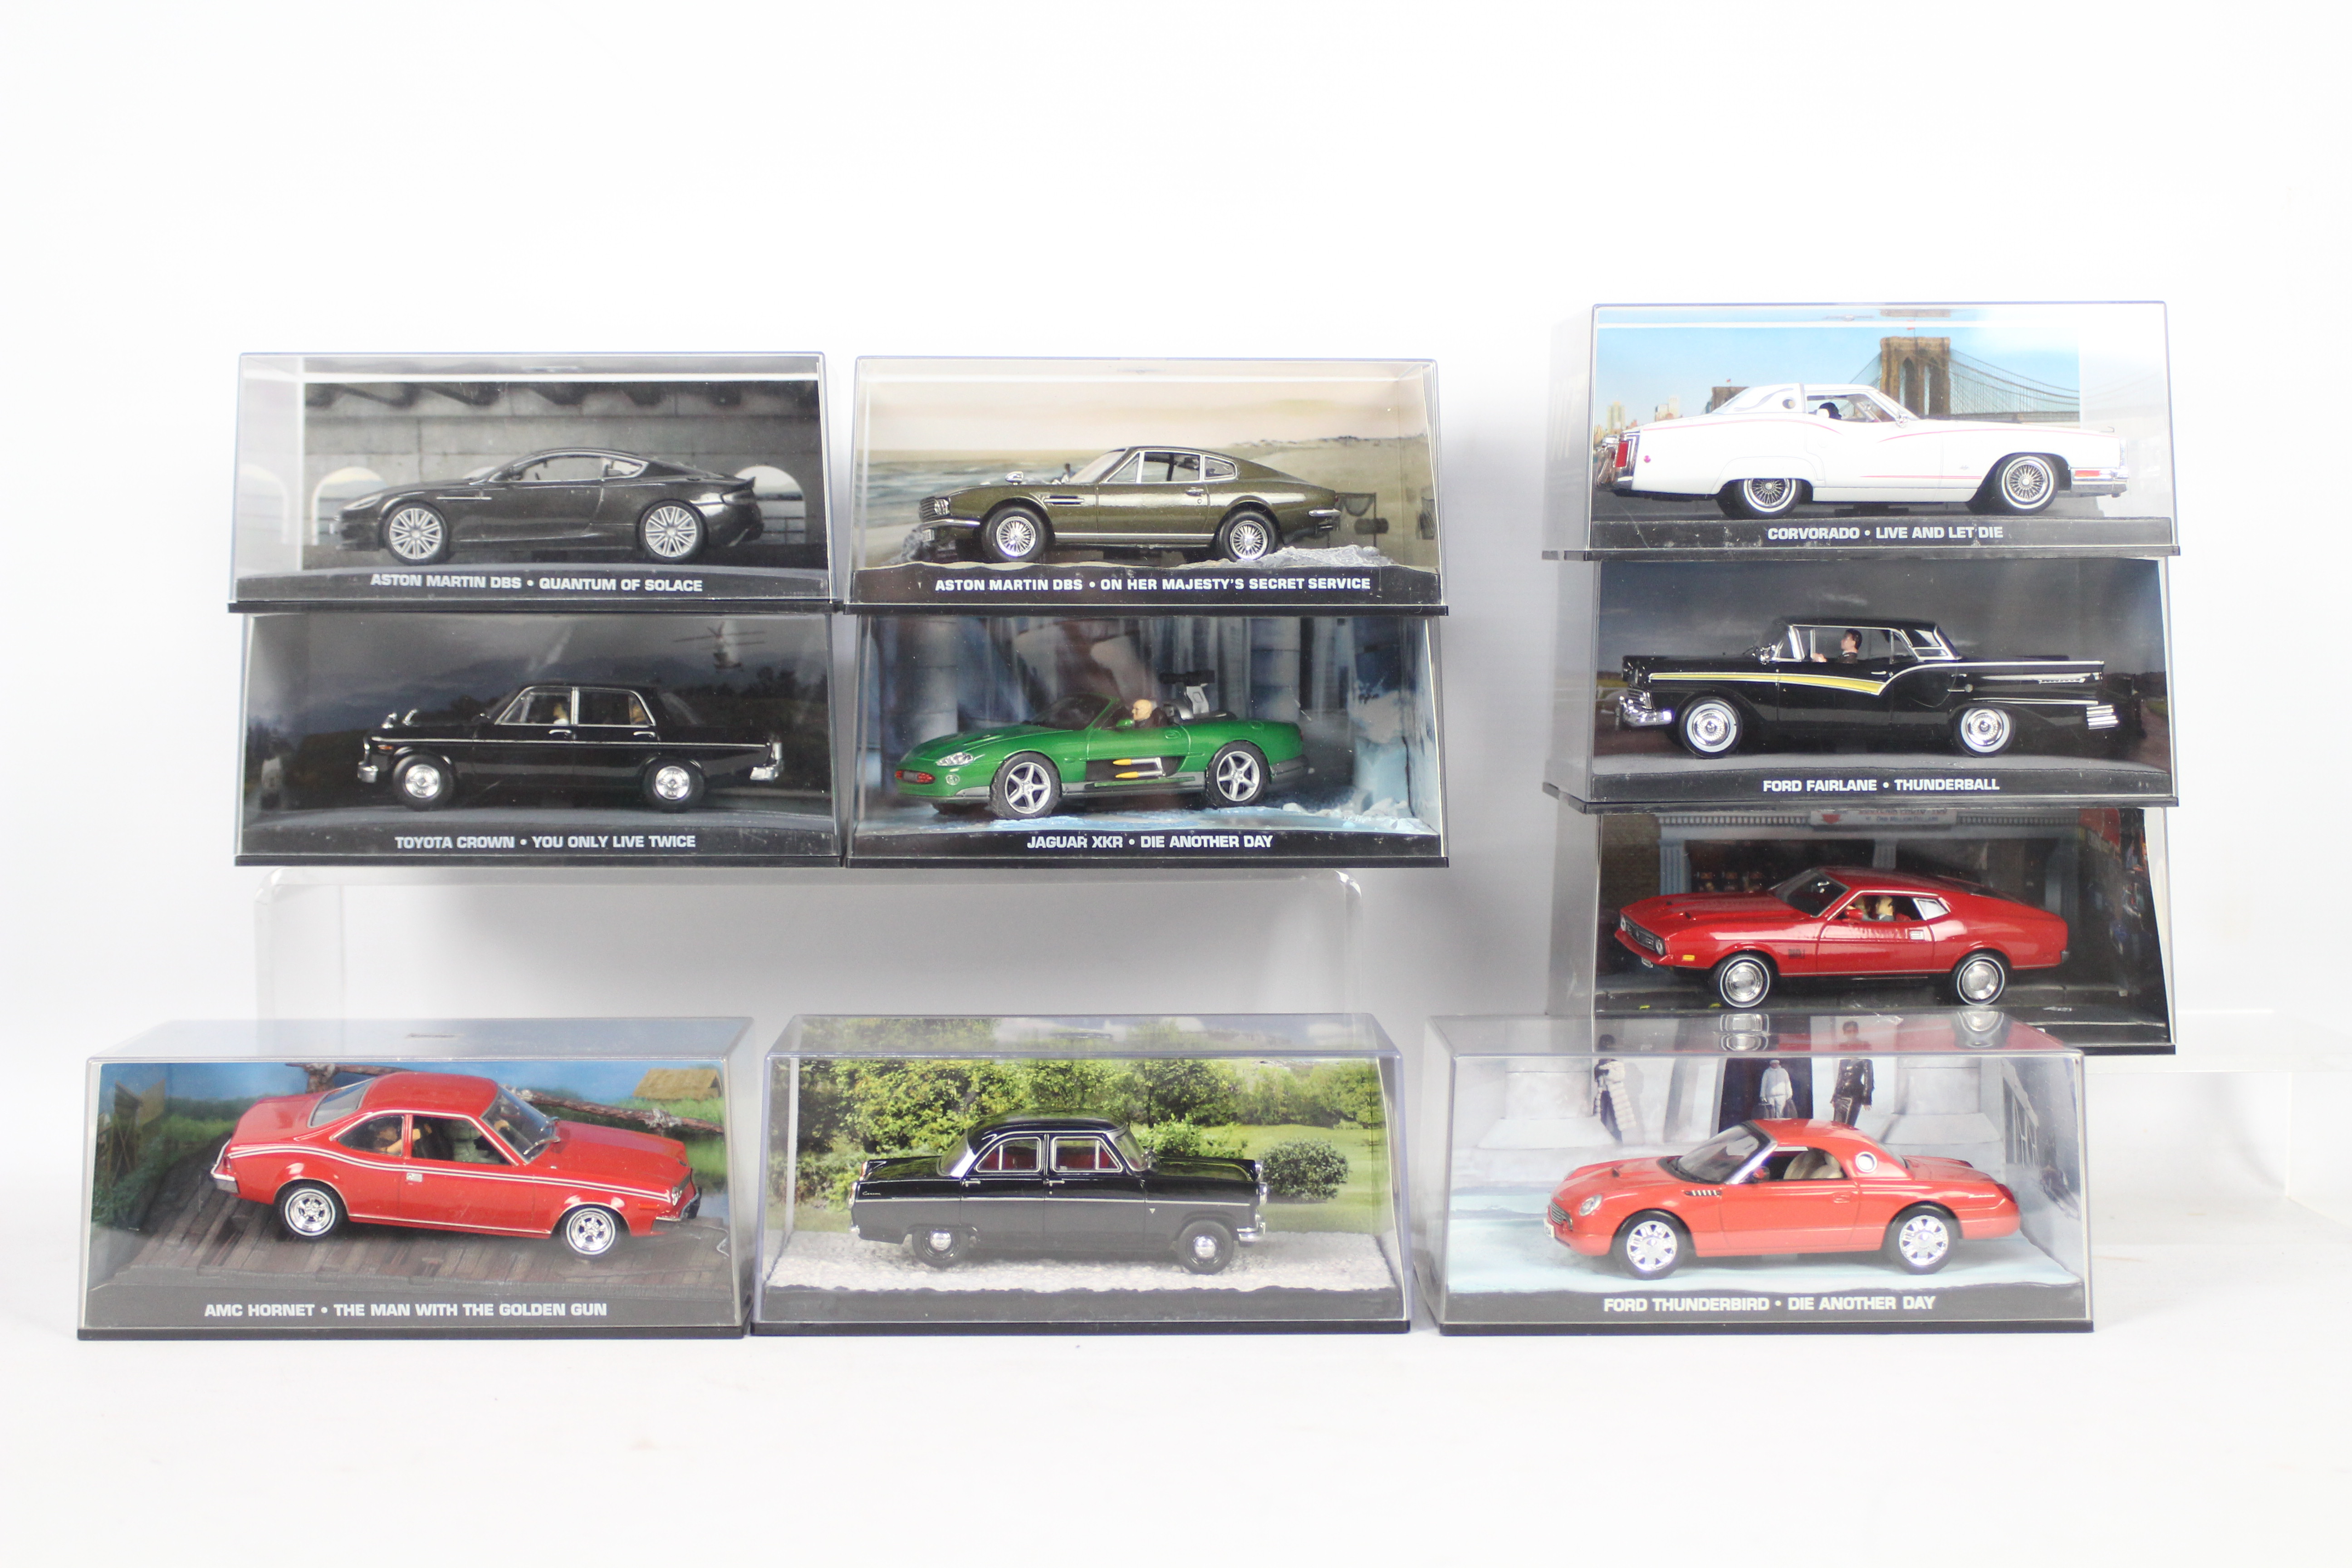 Universal Hobbies / GE Fabbri - 10 boxed diecast model vehicles from 'The James Bond Car